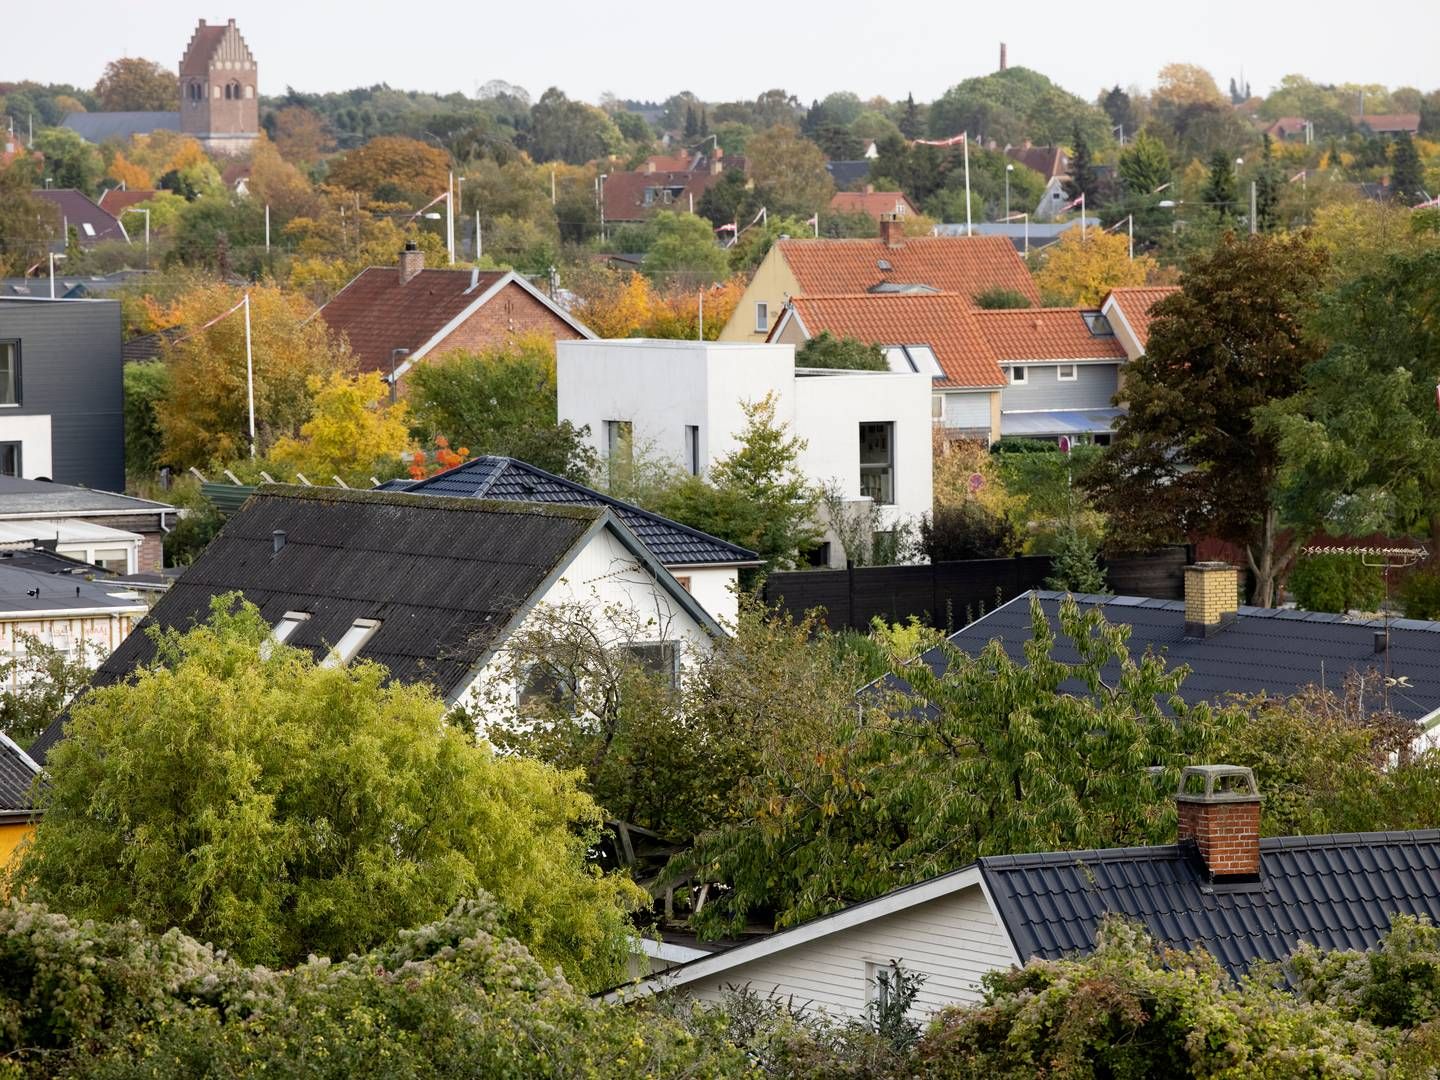 Huspriser kan falde op mod 15 til 20 pct. fra toppen i sommer, lyder det fra Nykredit i ny prognose. | Foto: Thomas Borberg